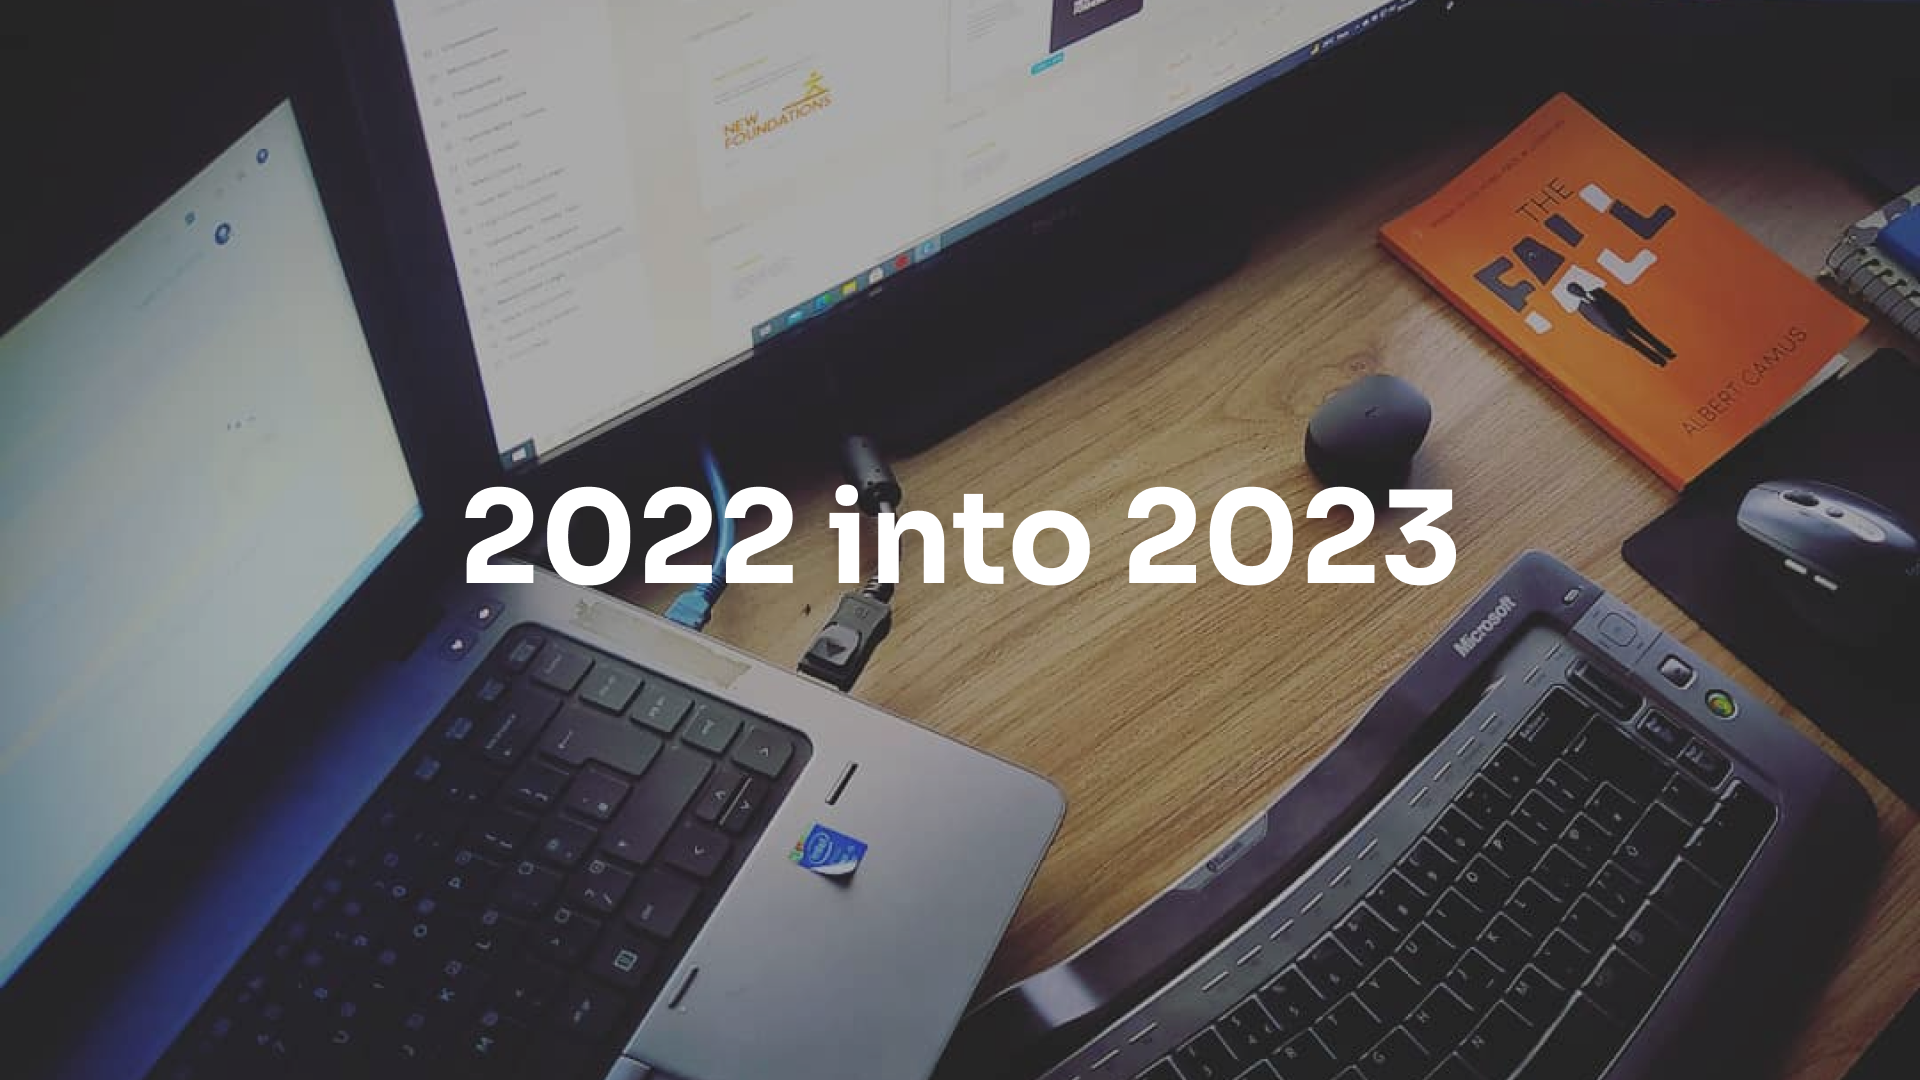 2022 into 2023